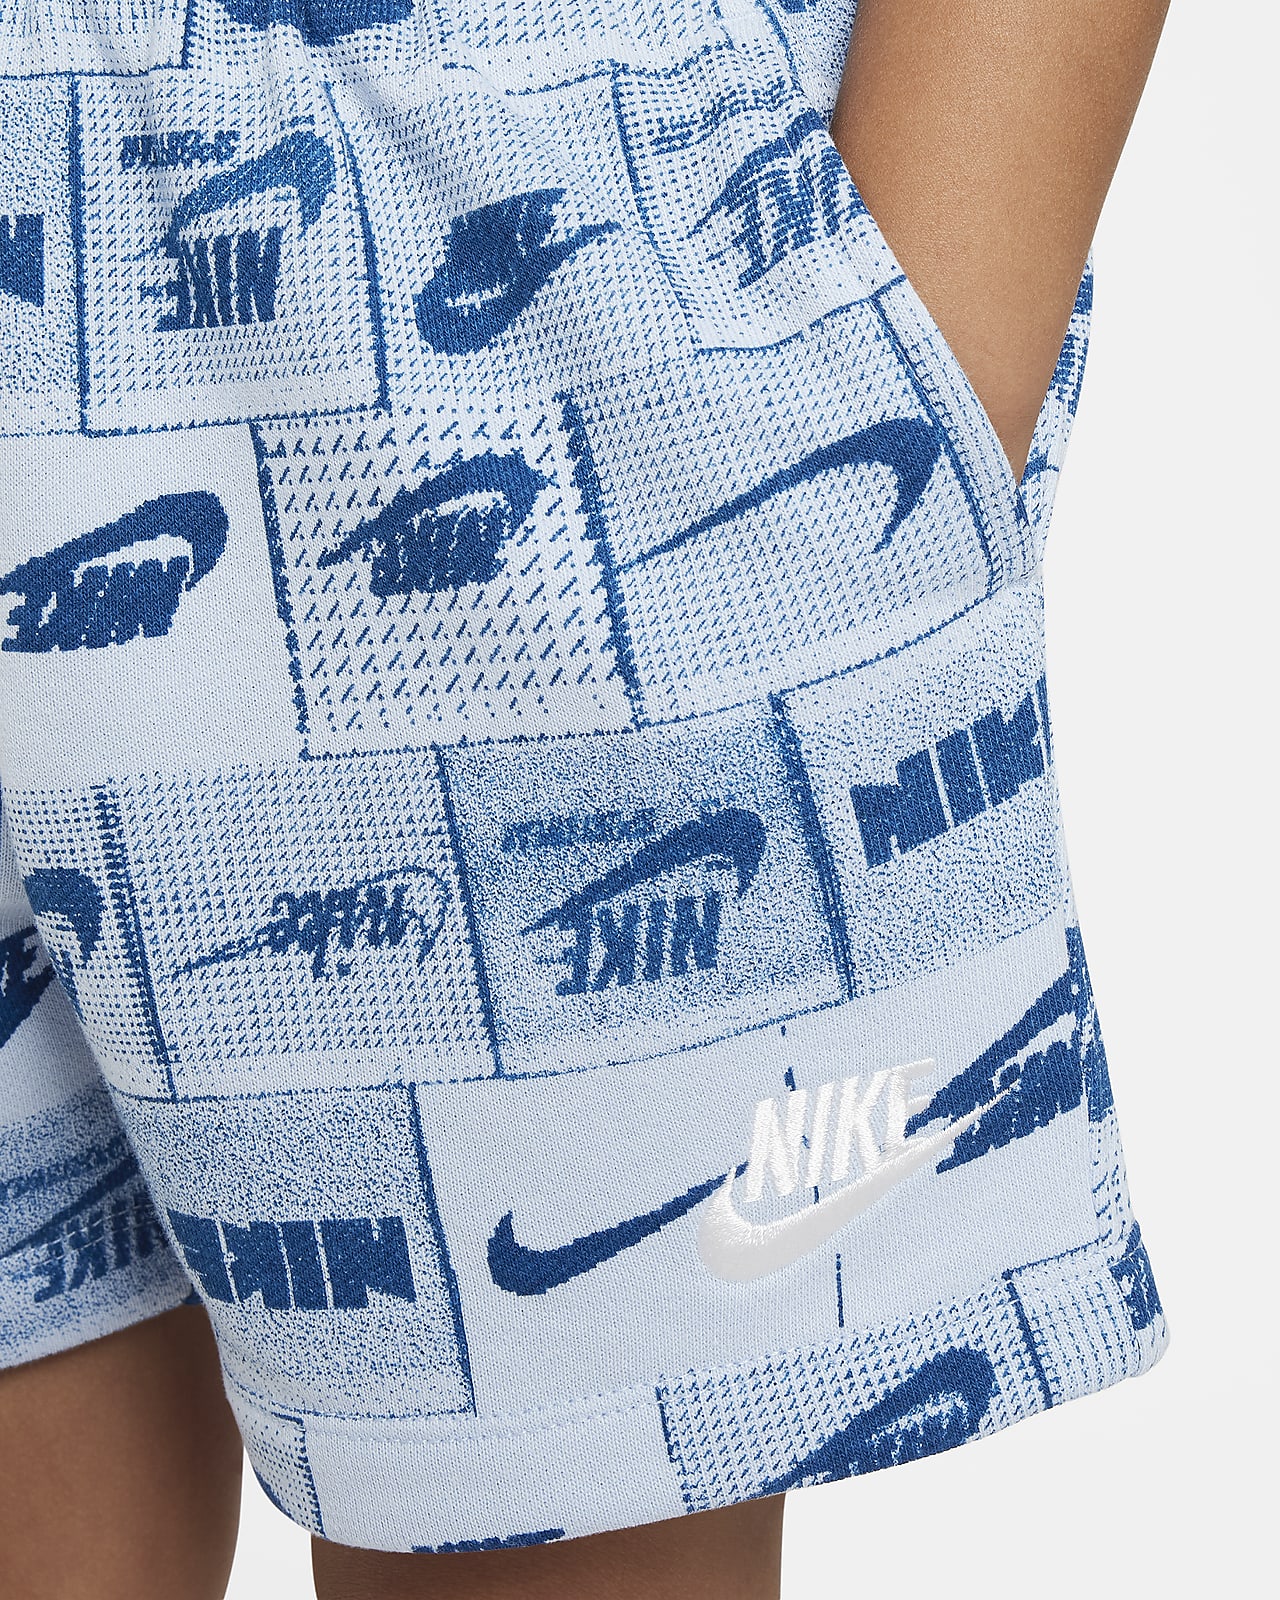 Toddler Club Shorts. Nike Printed Sportswear